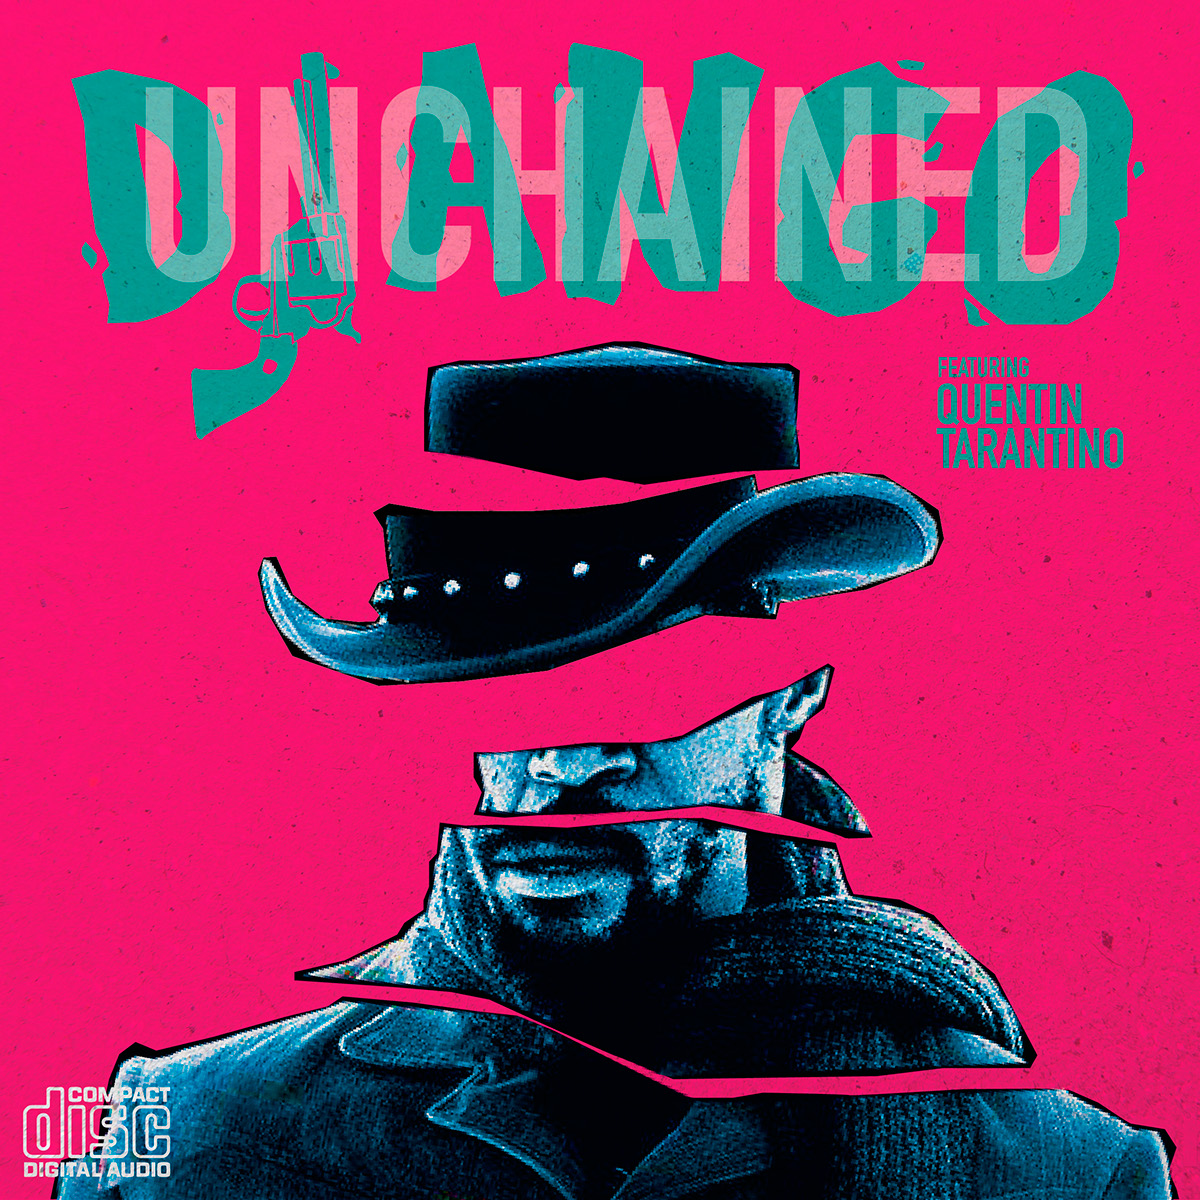 django Django Unchained Django Desencadenado Tarantino Quentin west jazz films StamKid Stam Kid stam